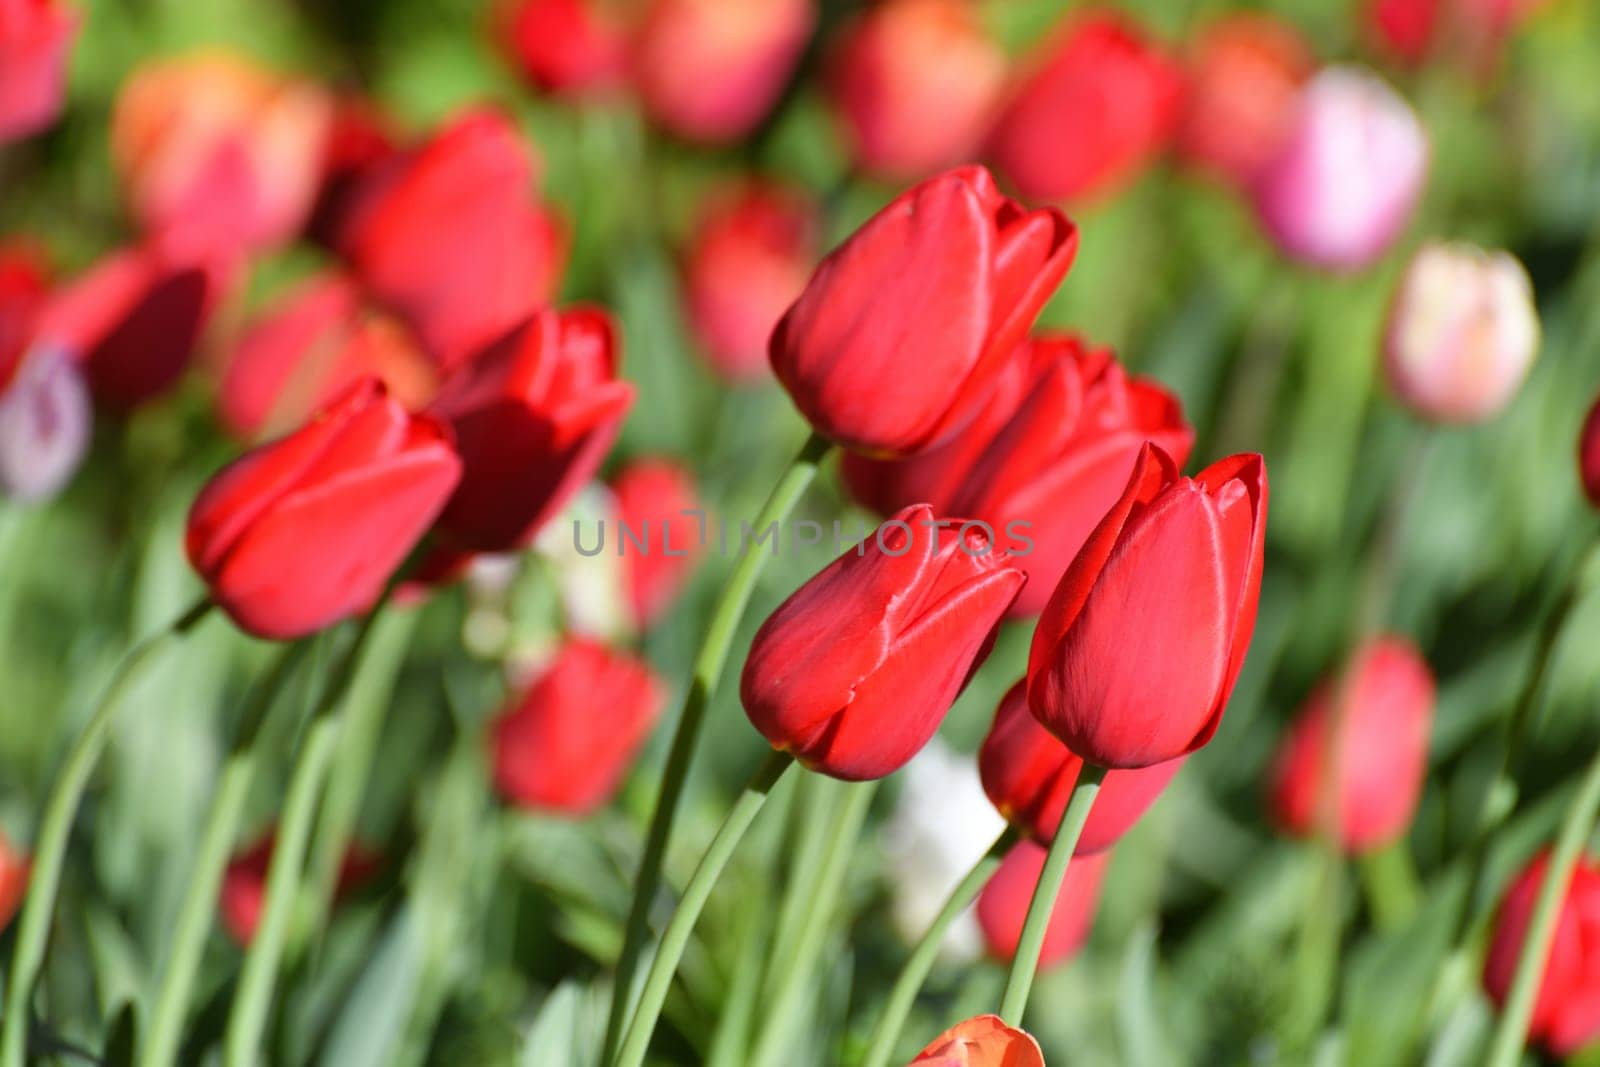 Variety ile de france tulip